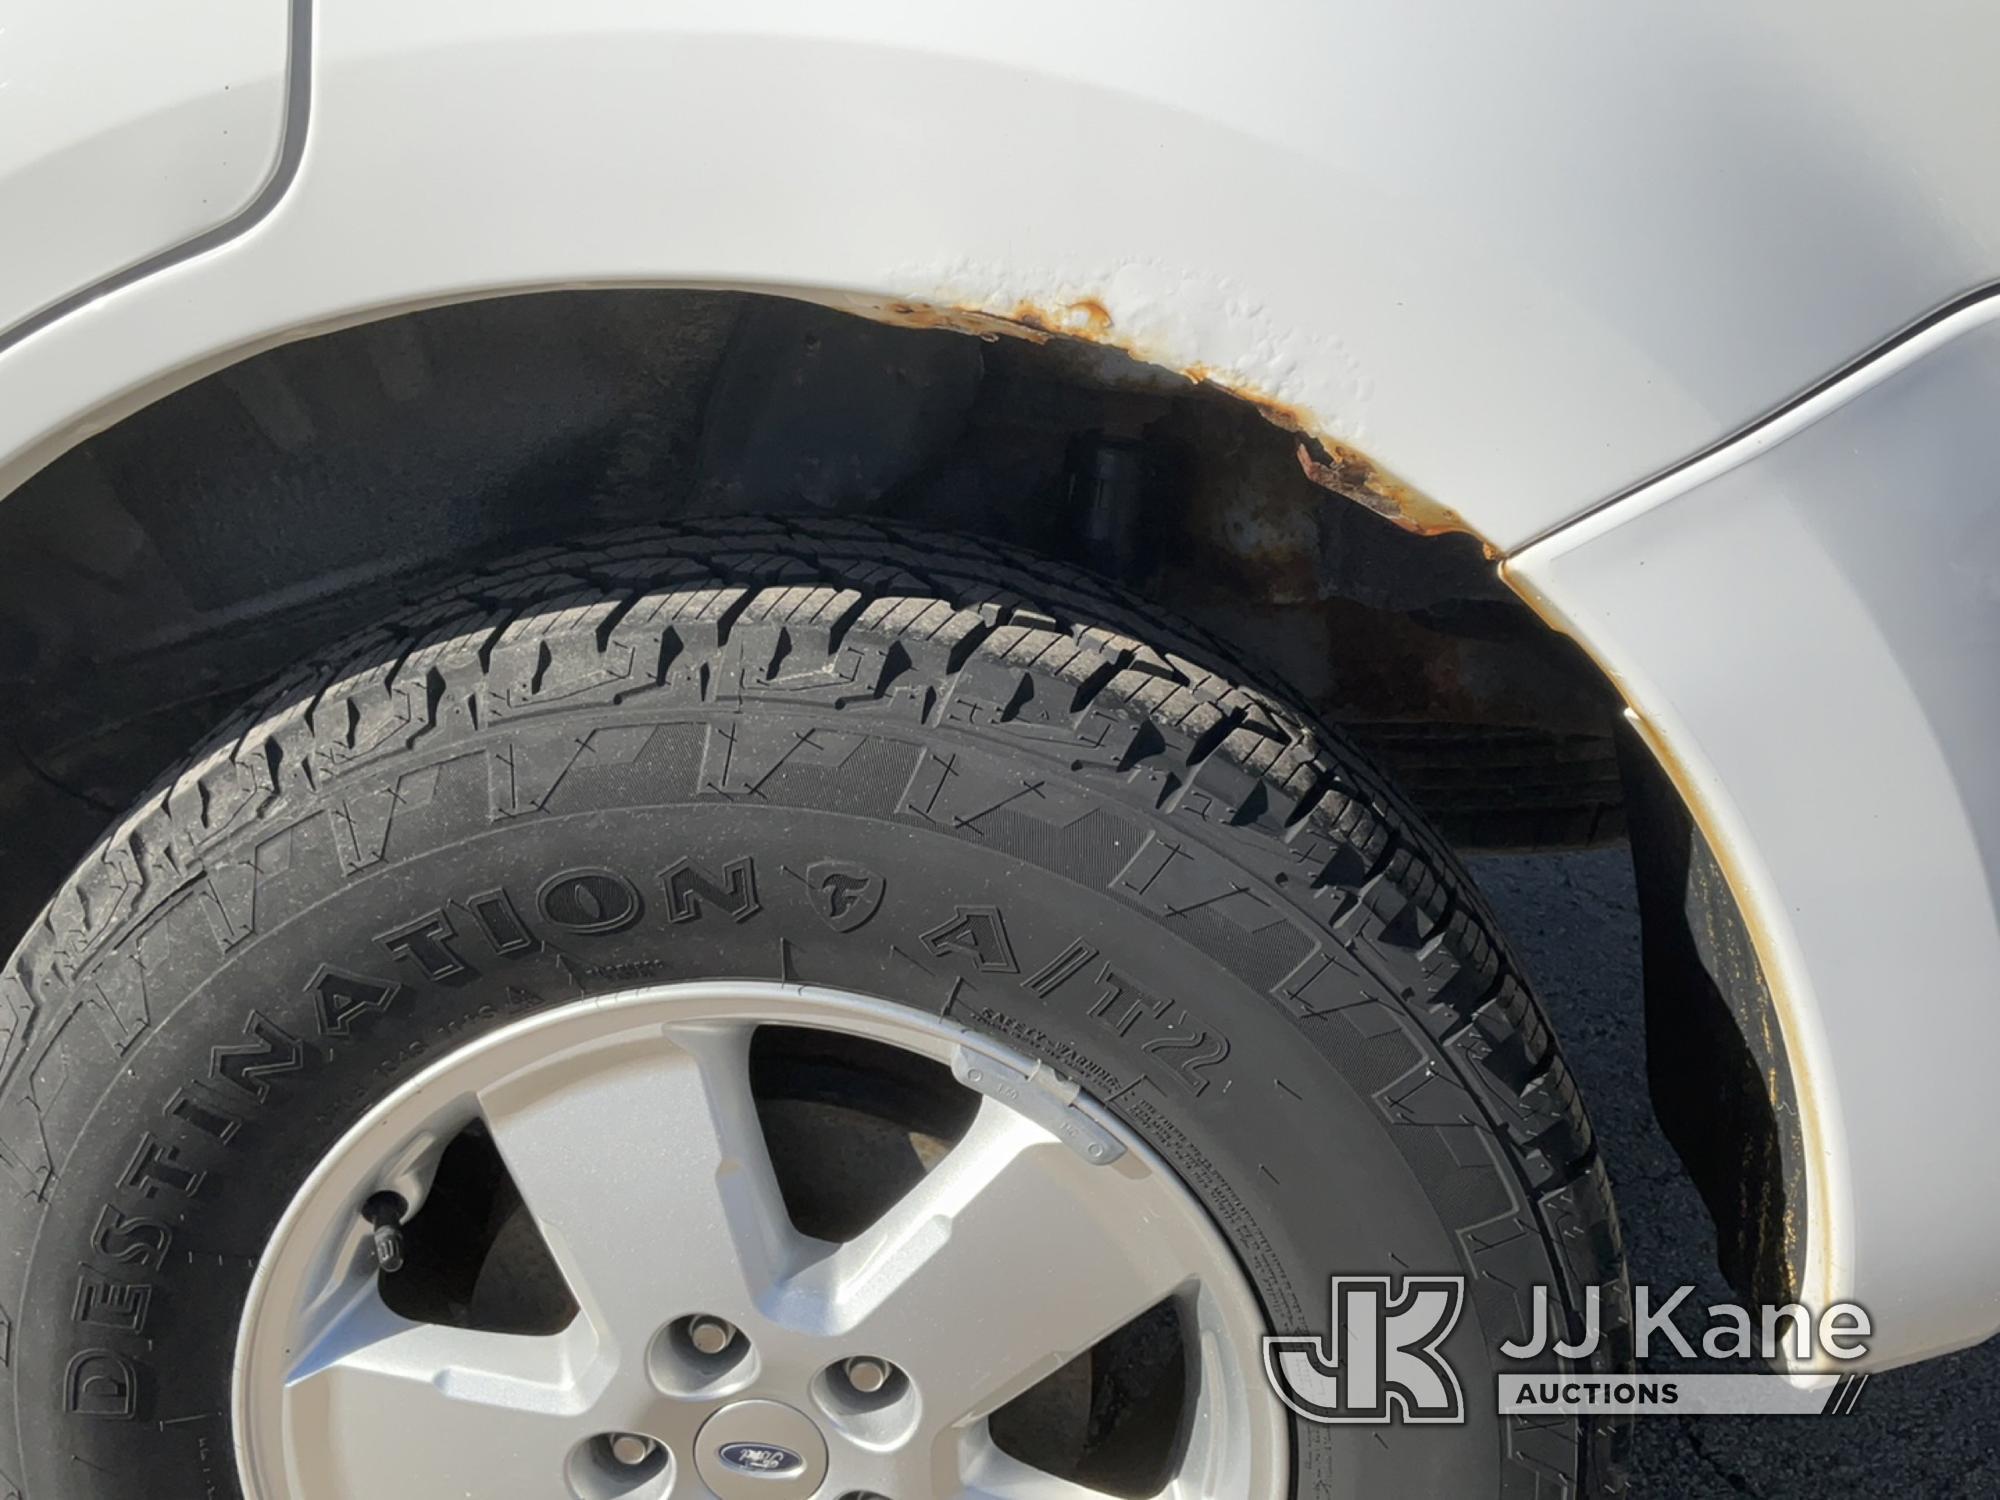 (South Beloit, IL) 2012 Ford Escape 4x4 4-Door Sport Utility Vehicle Runs, Moves, Rust Damage